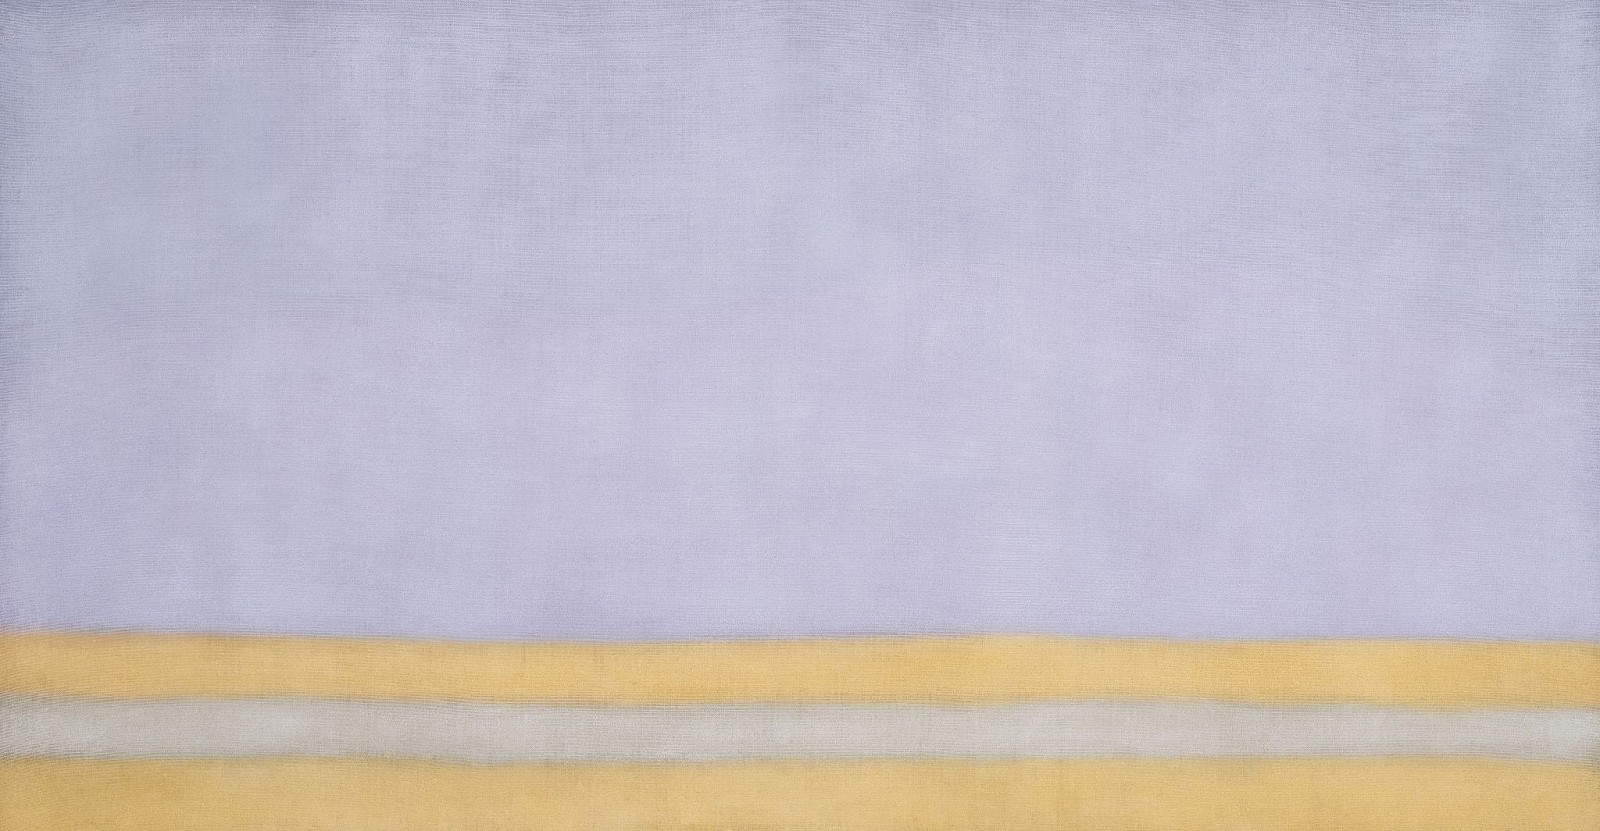 Susan Vecsey, Untitled (Lavender/Orange) | SOLD, 2020
Oil on linen, 40 x 76 in. (101.6 x 193 cm)
VEC-00206